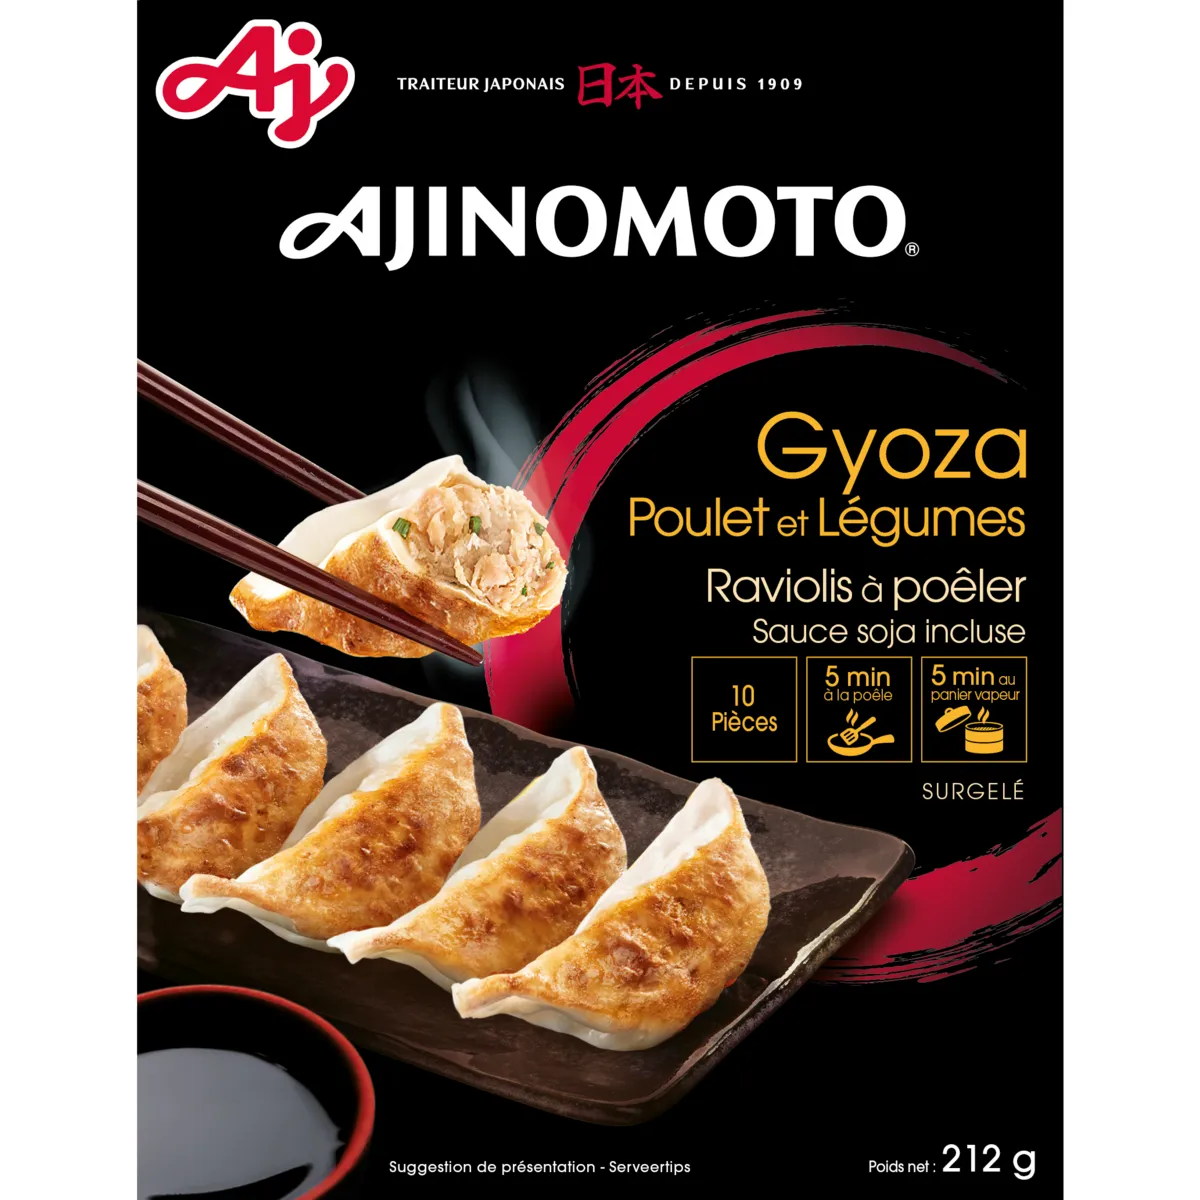 gyoza poulet et légumes surgelé ajinomoto